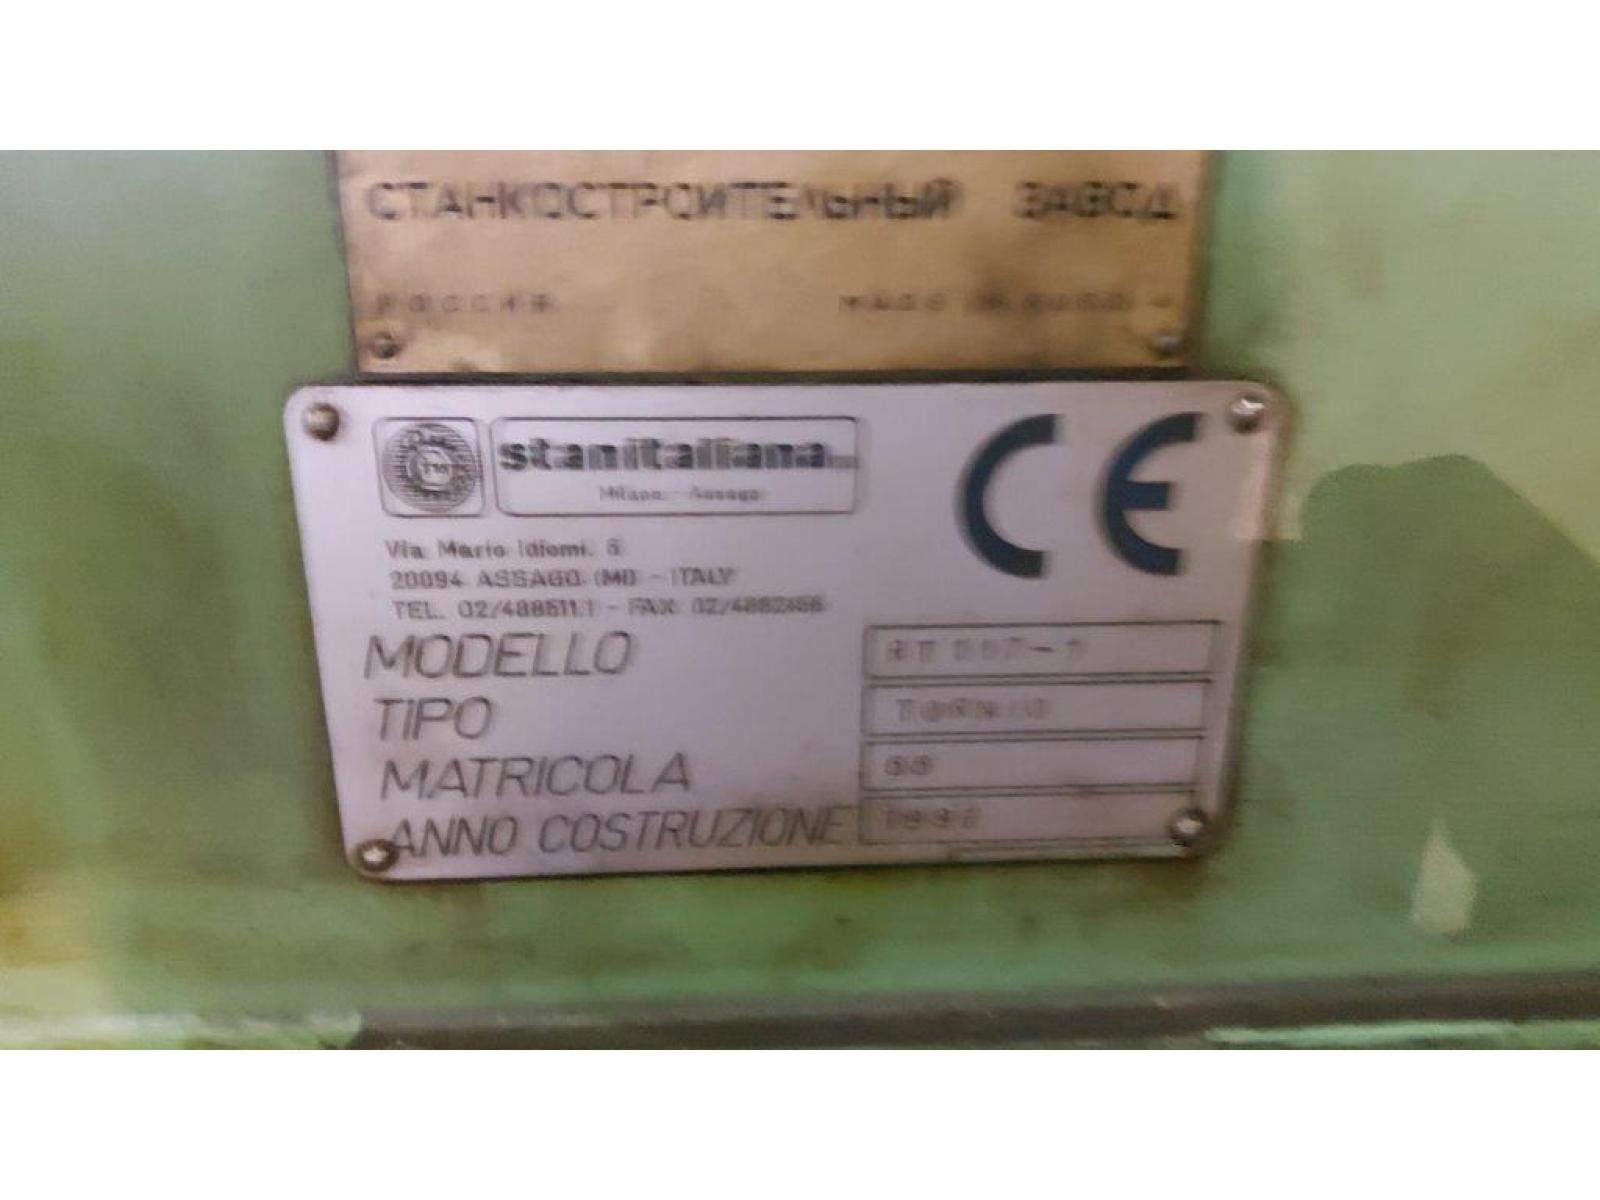 tornio staitaliana marcato CE 600 x  650mm